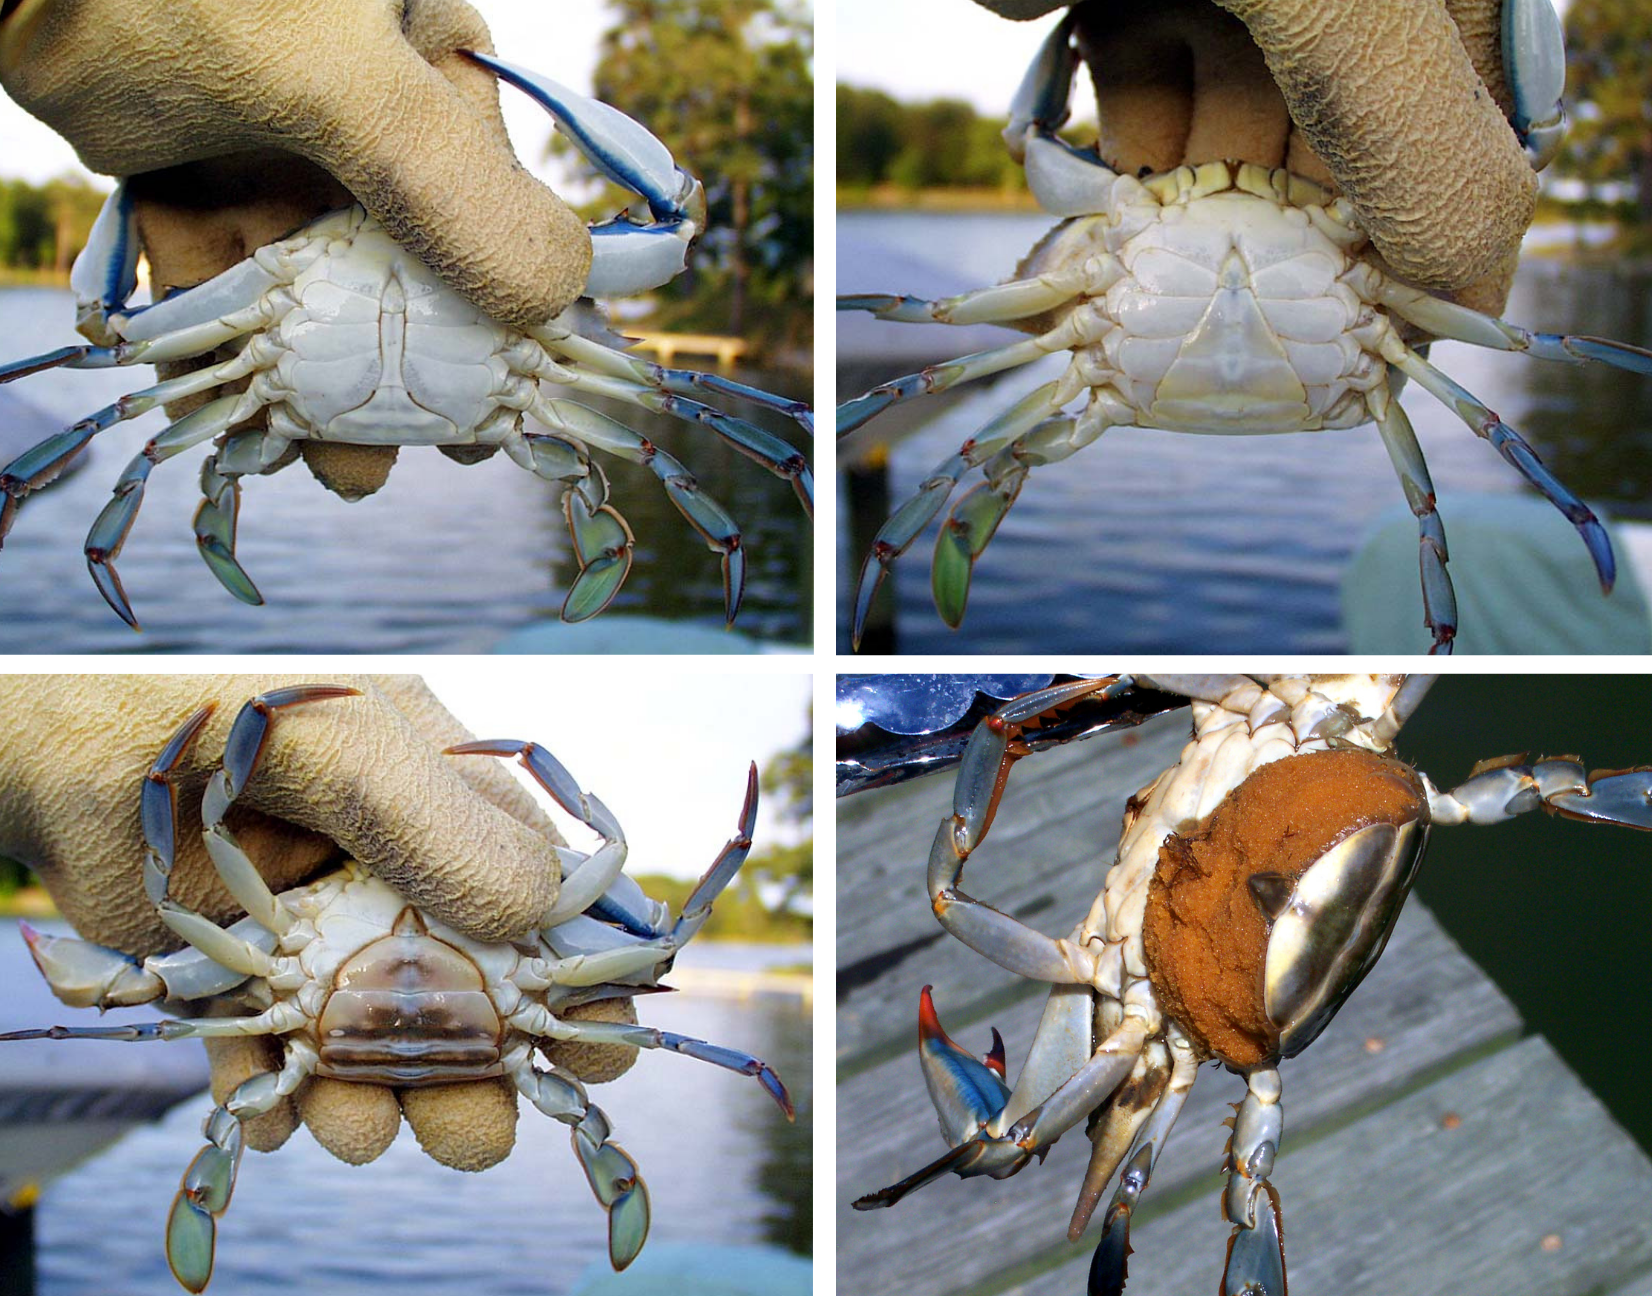 https://ncseagrant.ncsu.edu/coastwatch/wp-content/uploads/sites/2/2019/06/Crab-identifiers.png